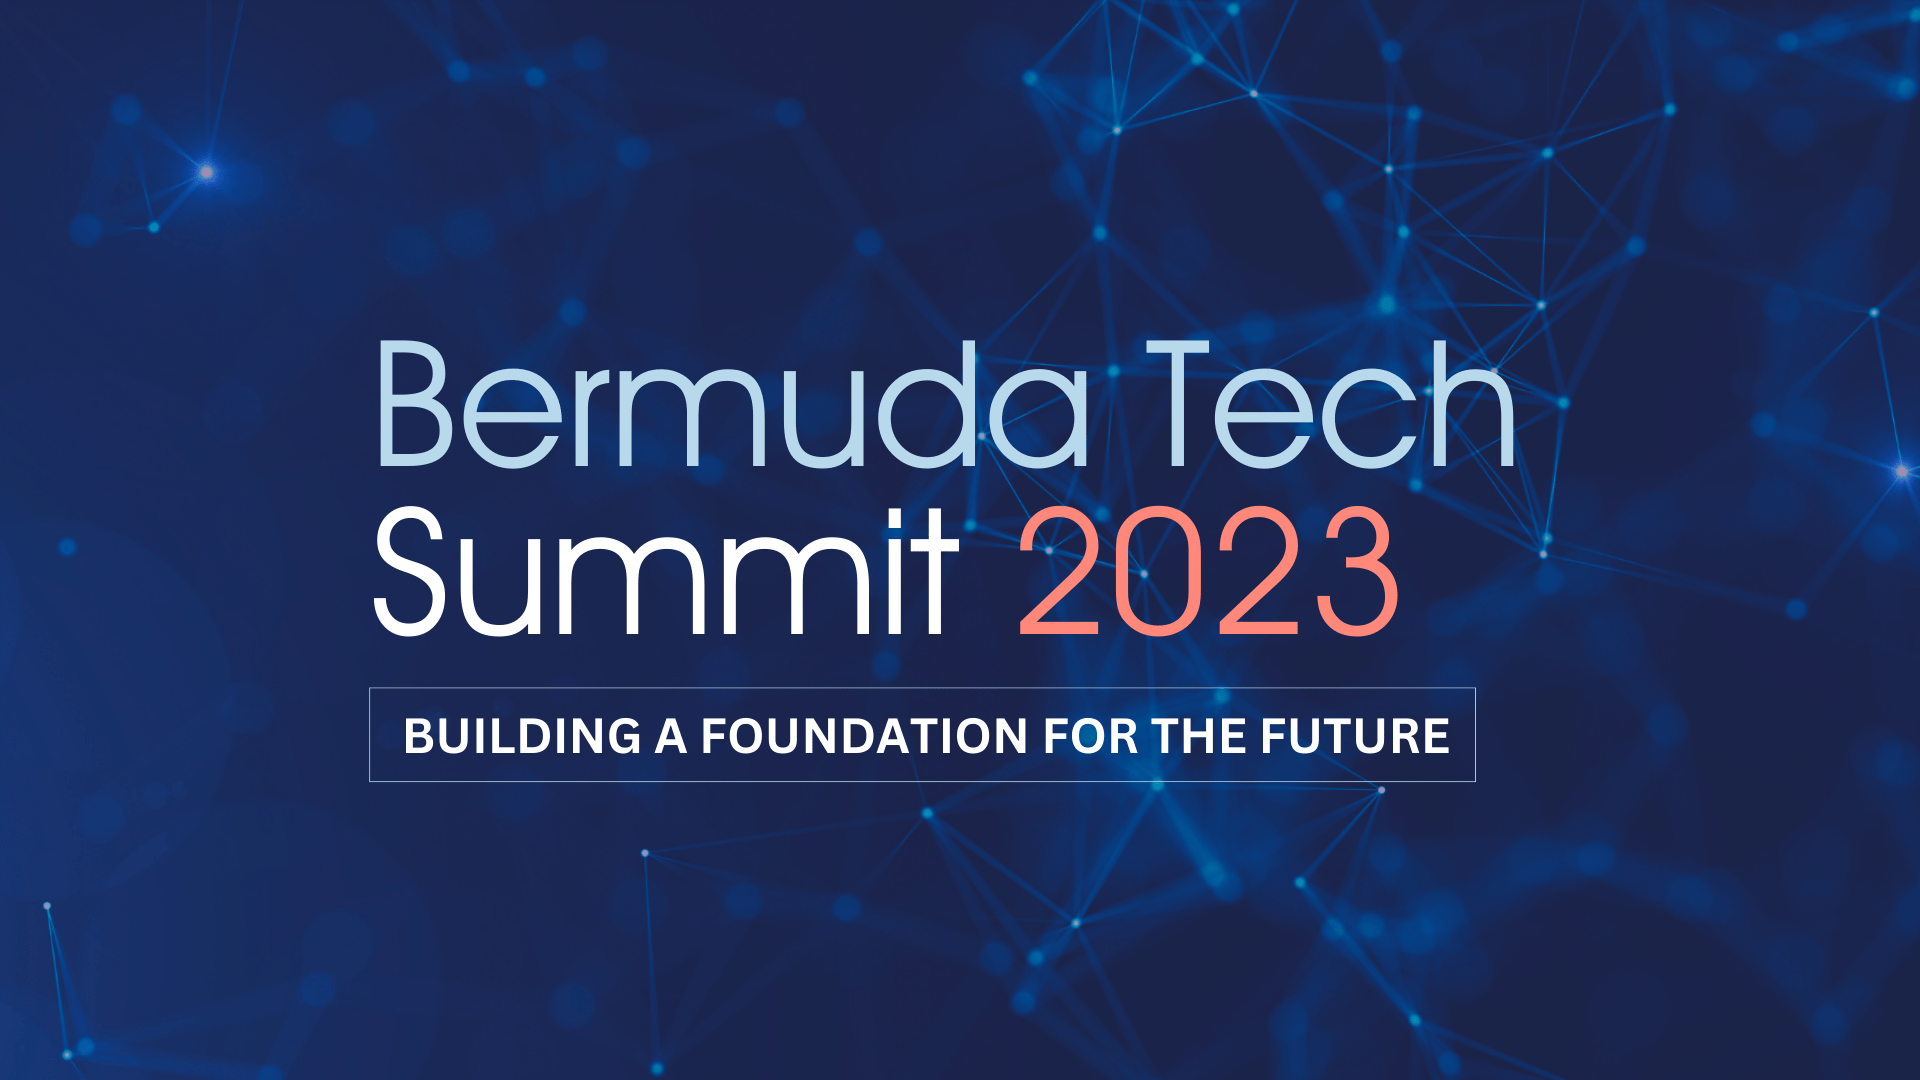 BDA’s Fifth Annual Bermuda Tech Summit To Be Held October 8-10